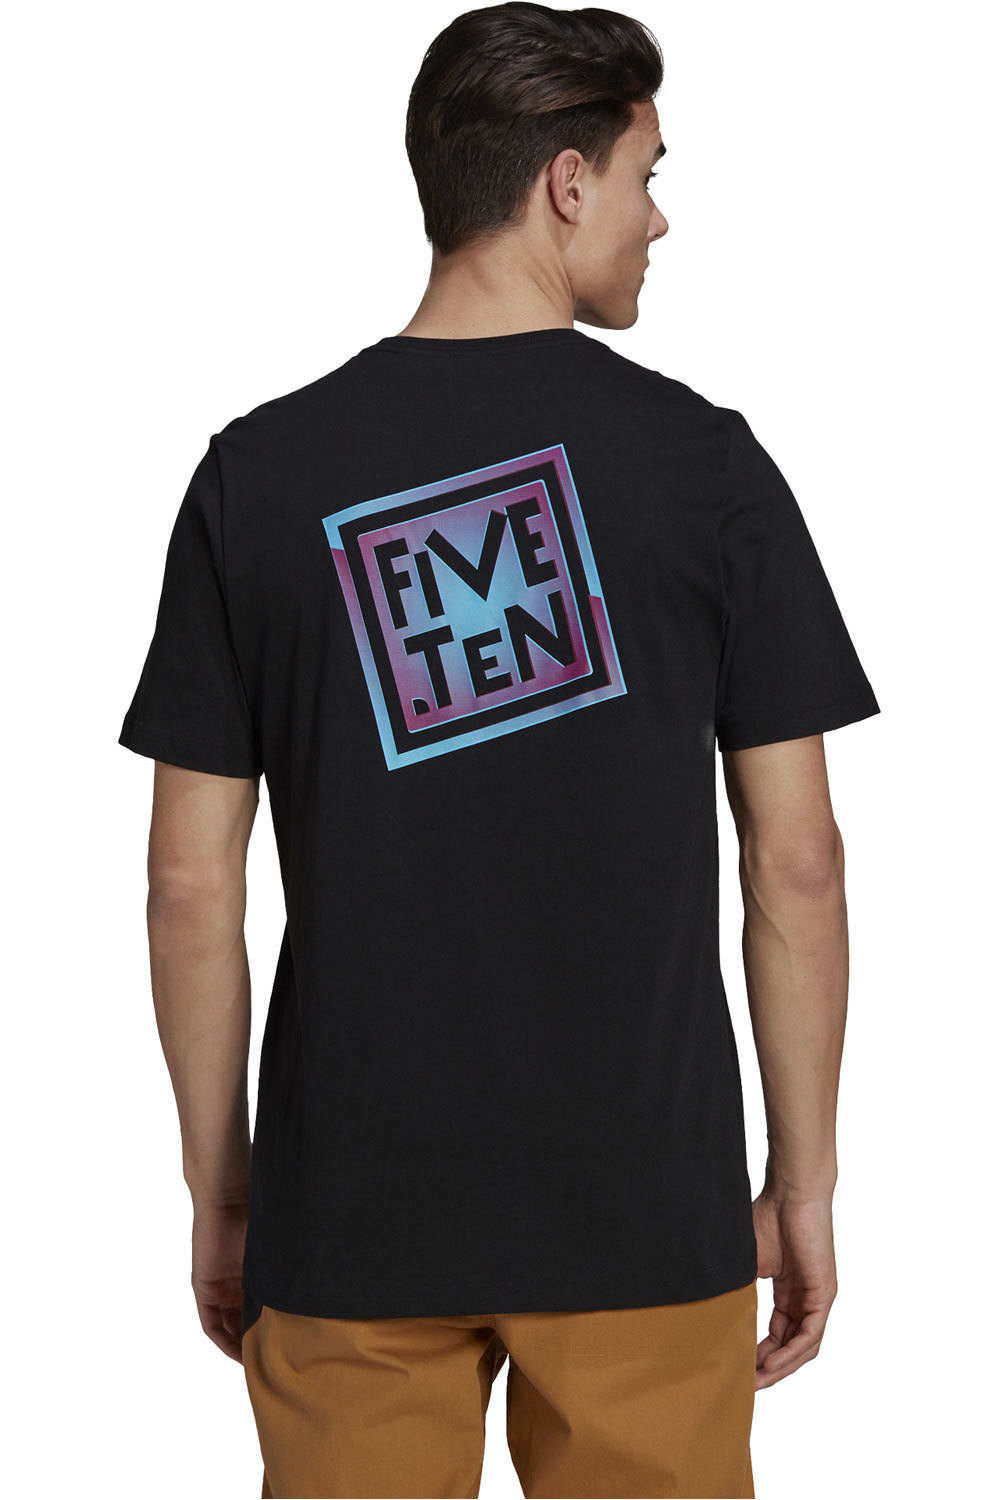 Five Ten camiseta montaña manga corta hombre Five Ten Heritage Logo vista trasera